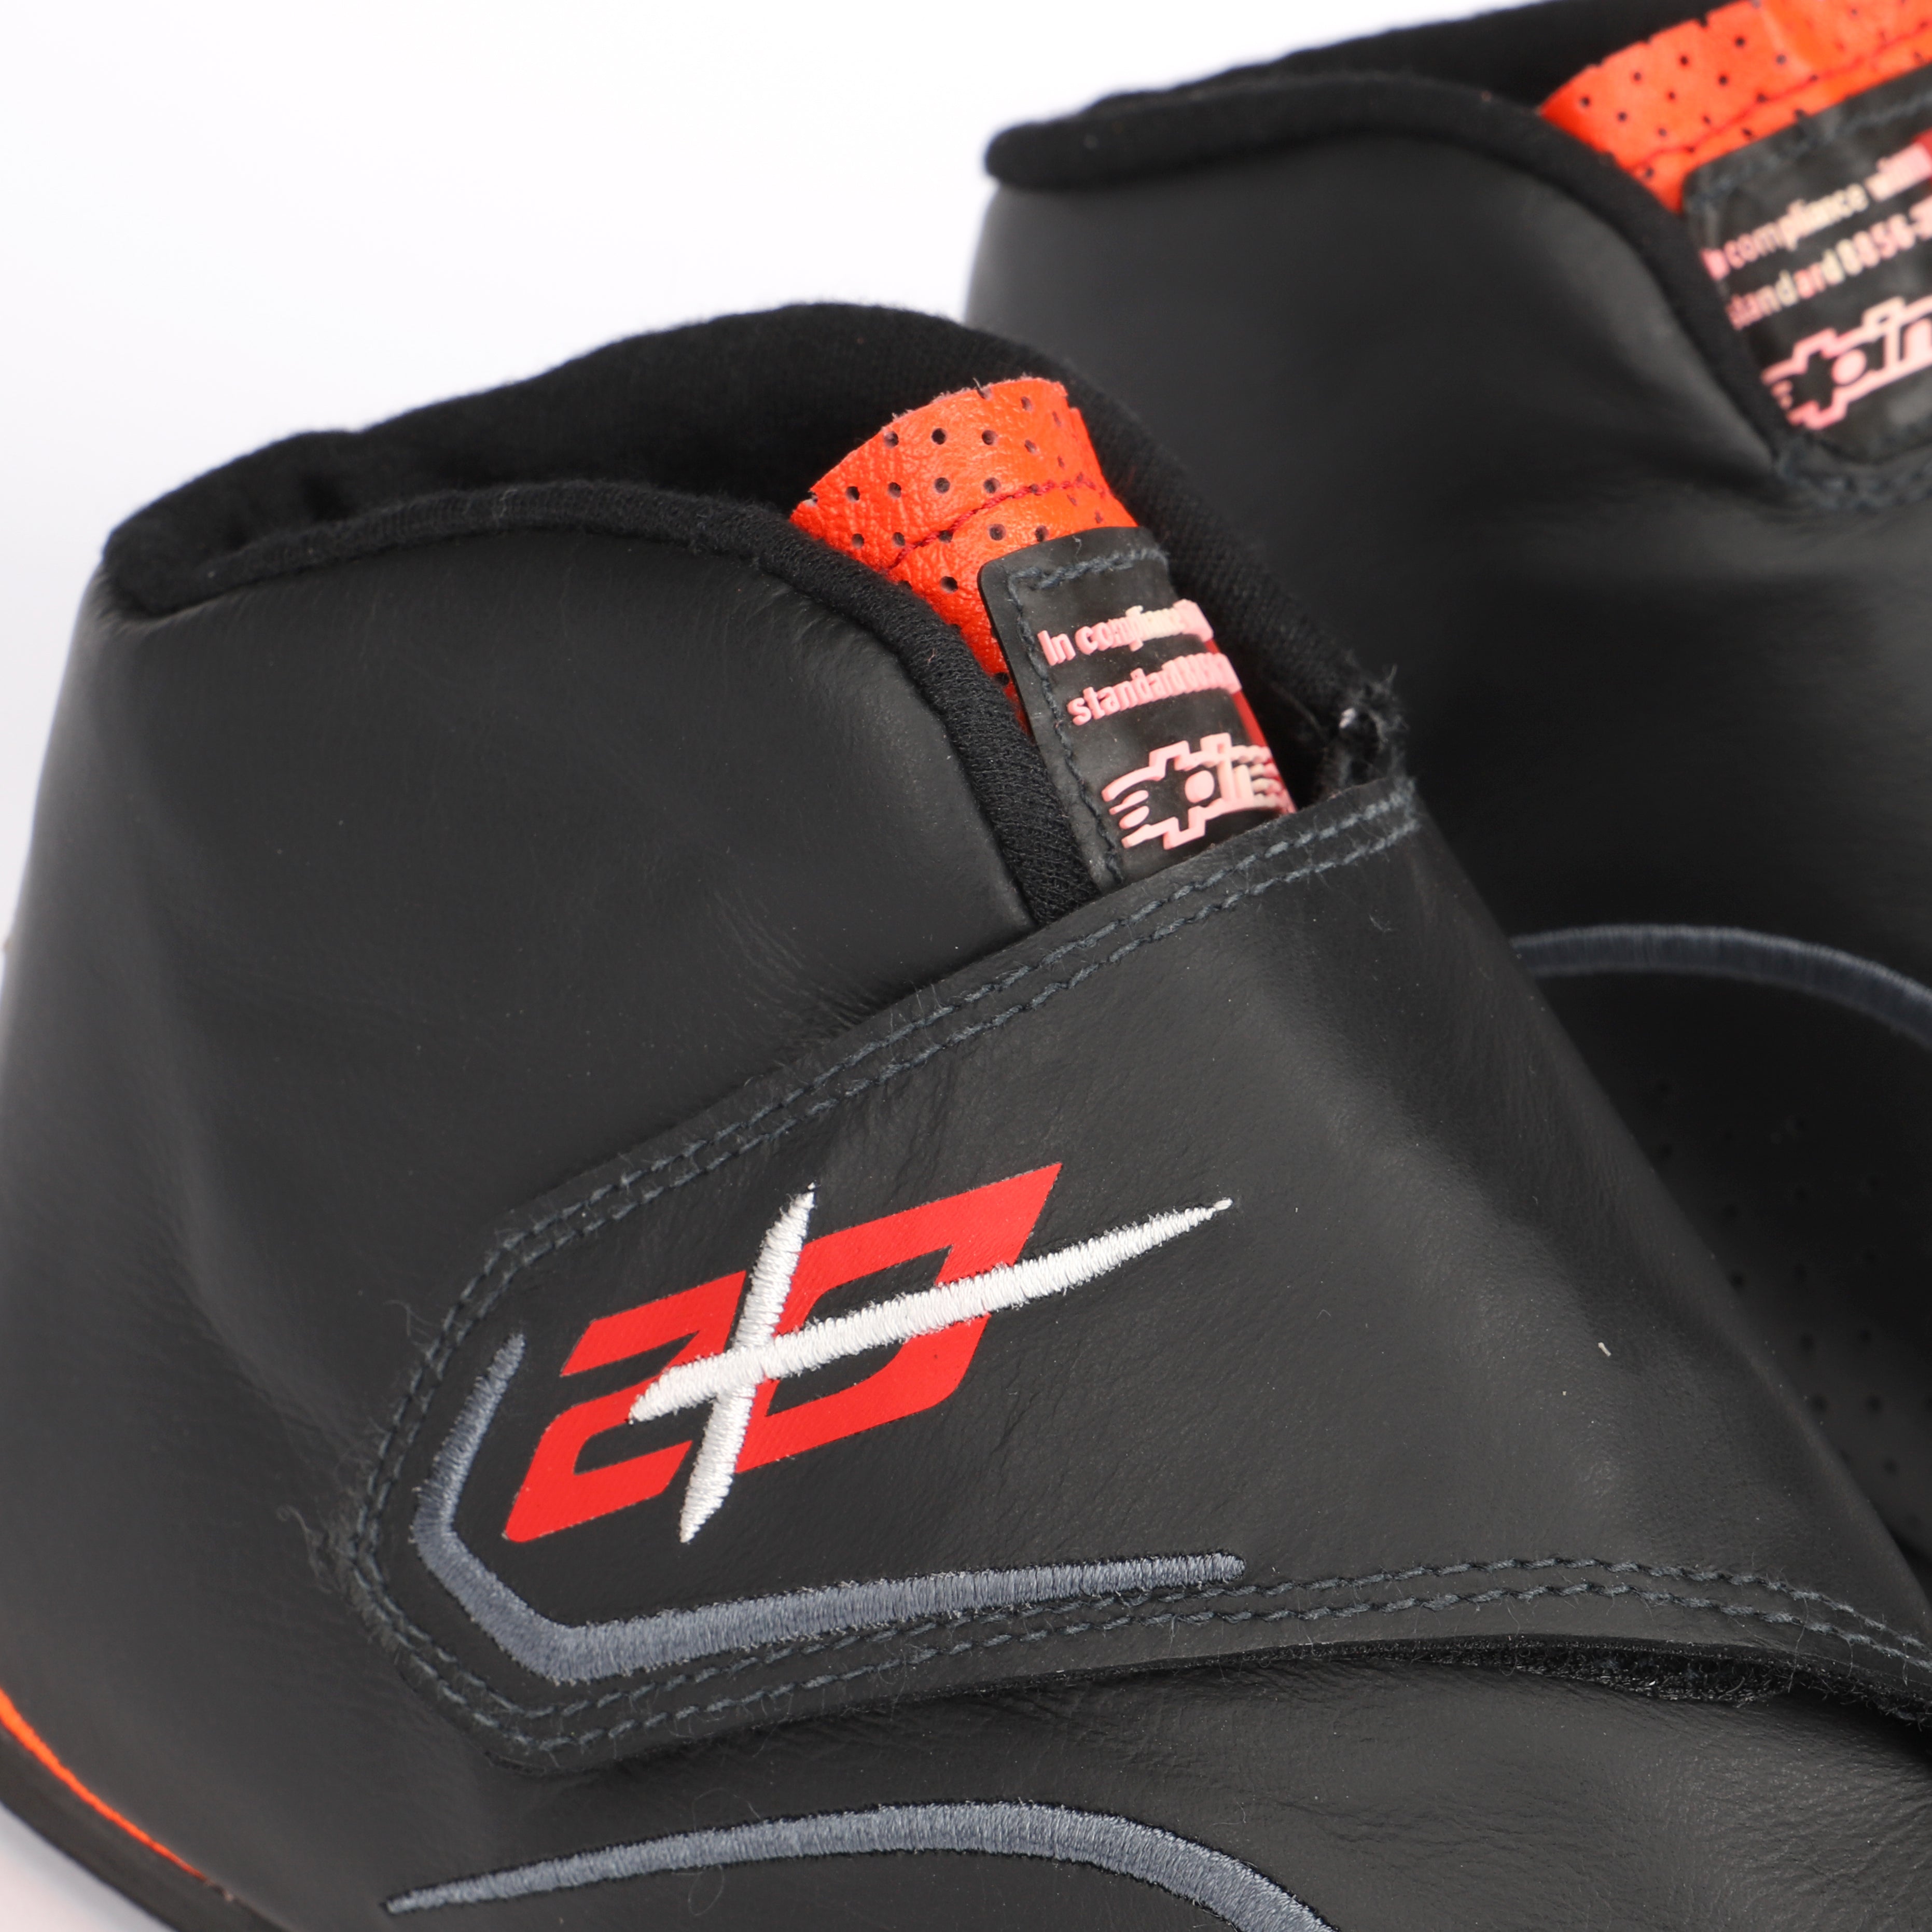 Kevin Magnussen 2014 Replica McLaren F1 Team Race Boots